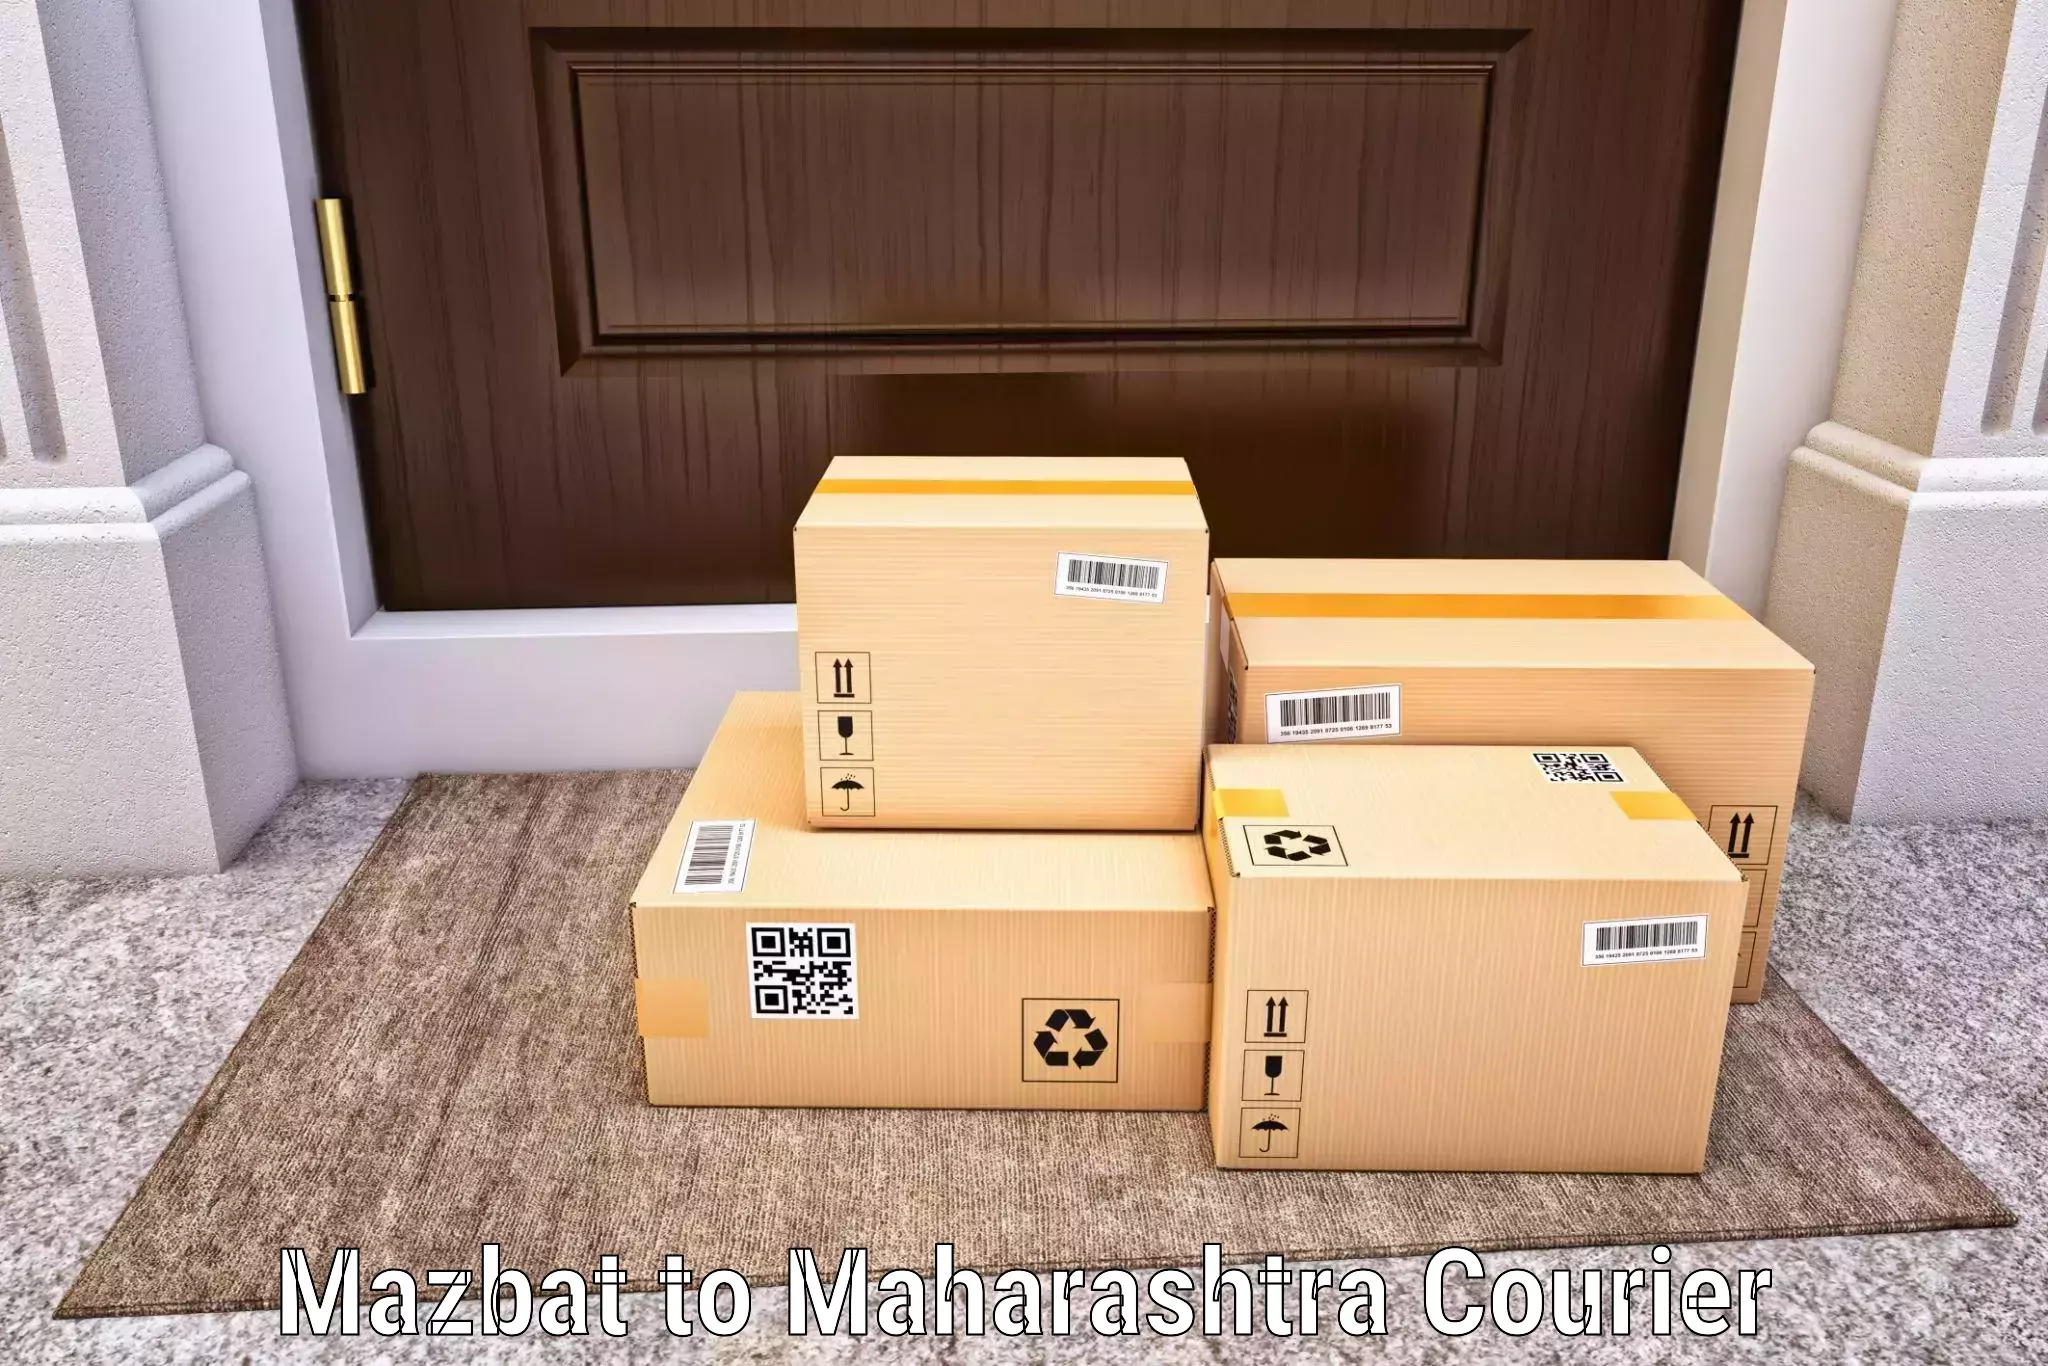 Modern delivery technologies Mazbat to Oras